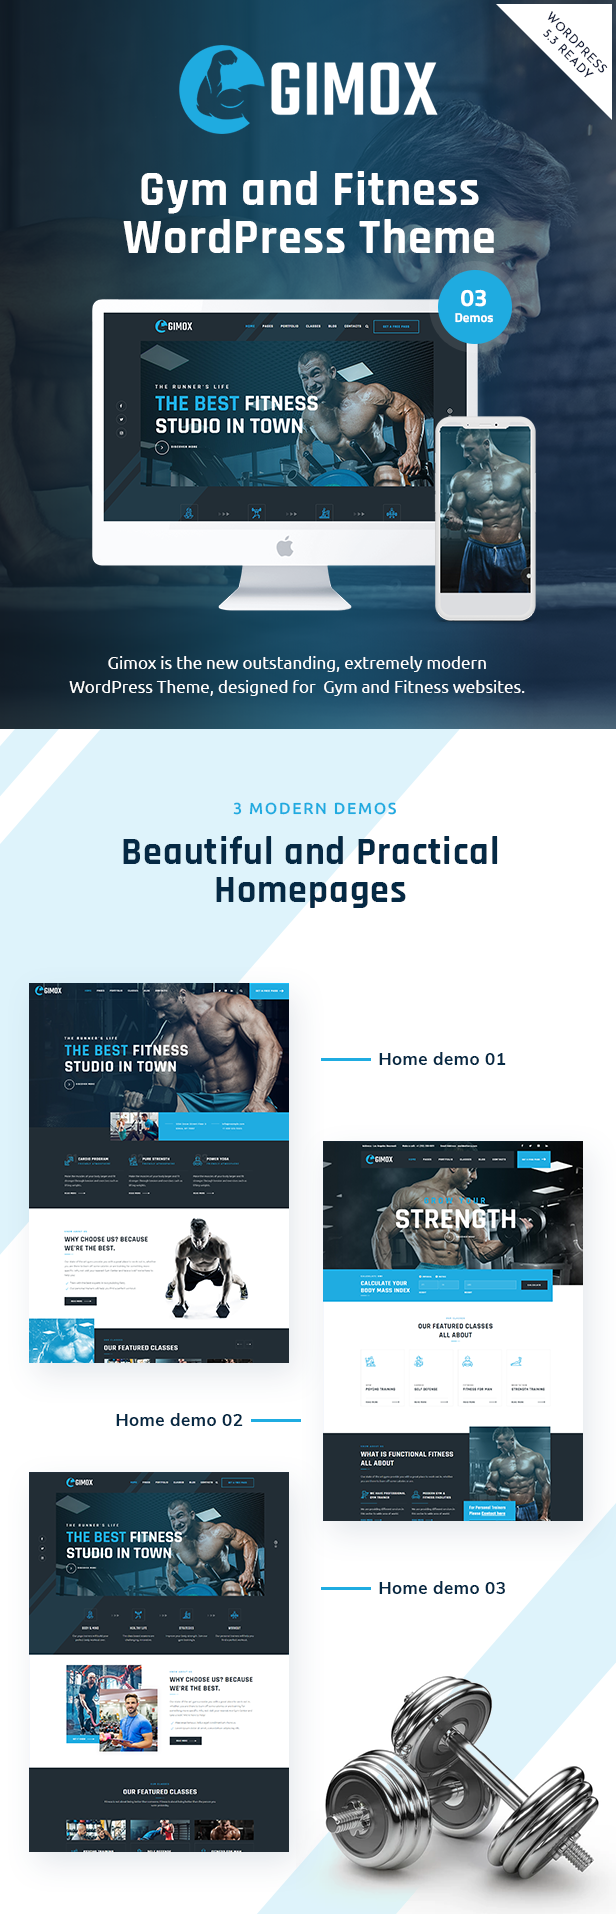 Gimox – Gym and Fitness WordPress Theme